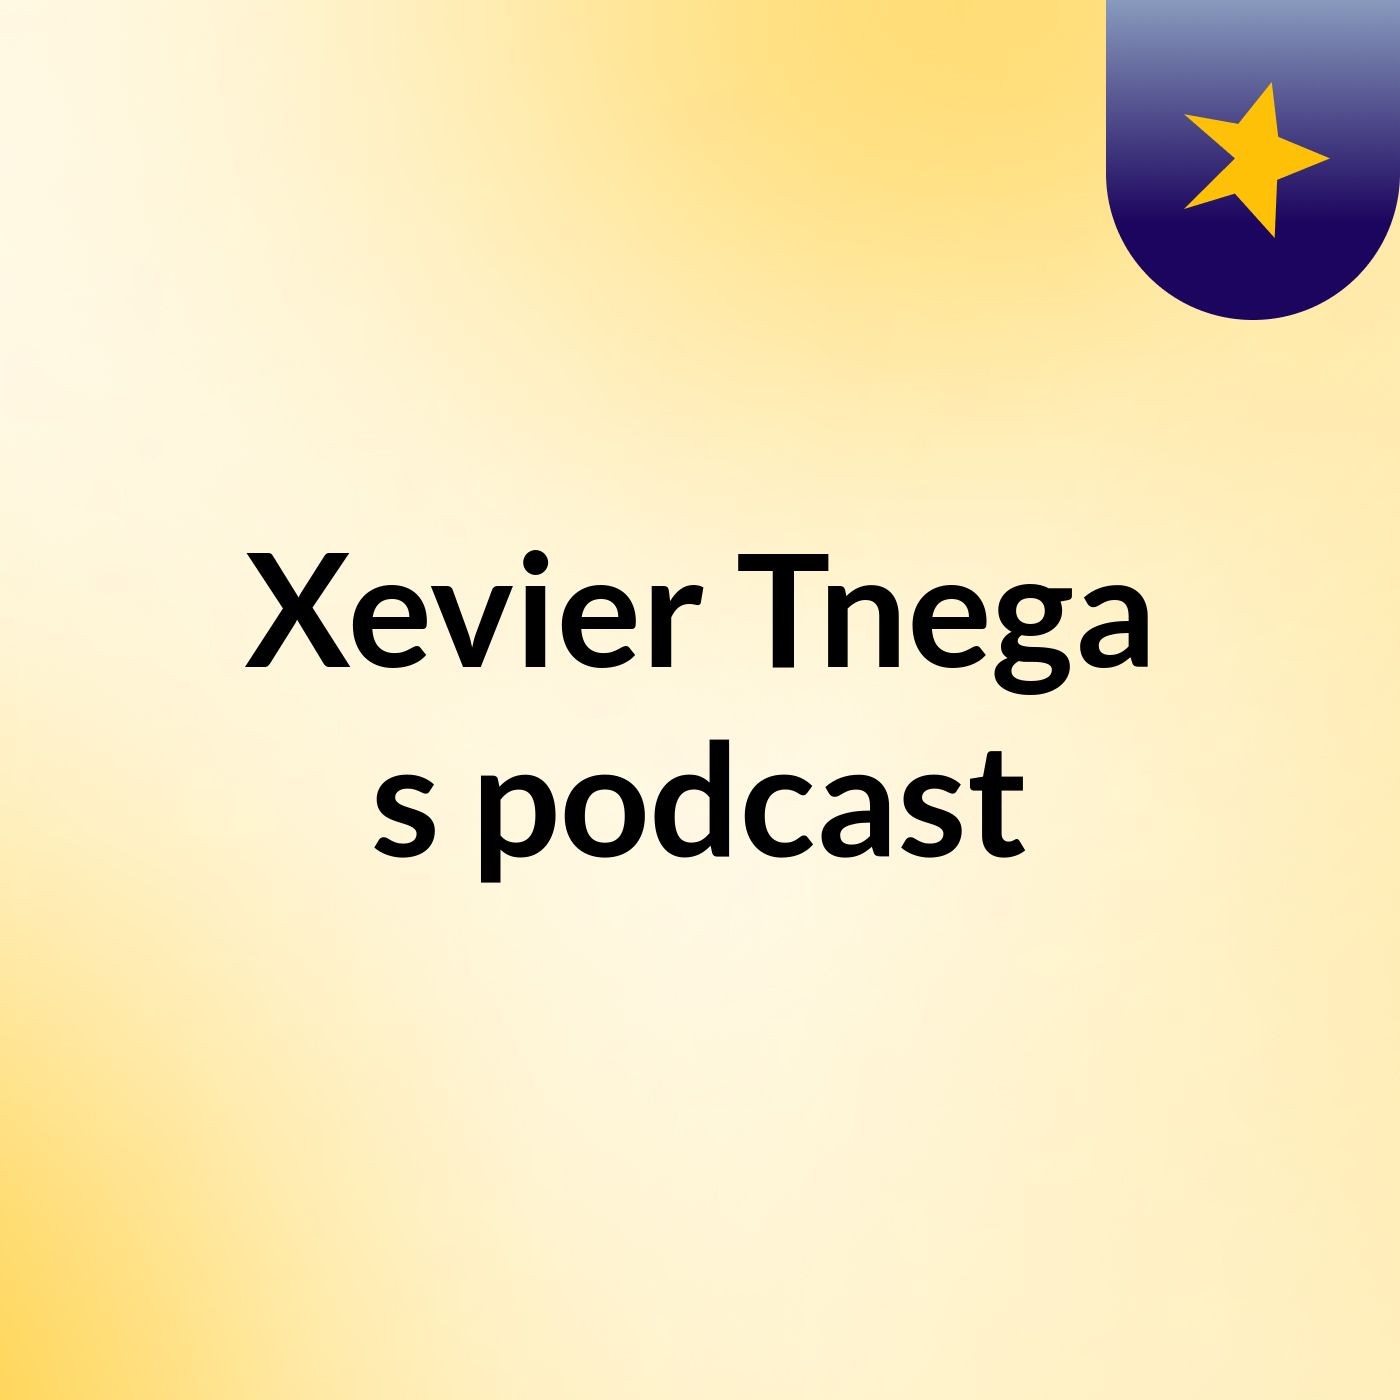 Episode 3 - Xevier Tnega's podcast